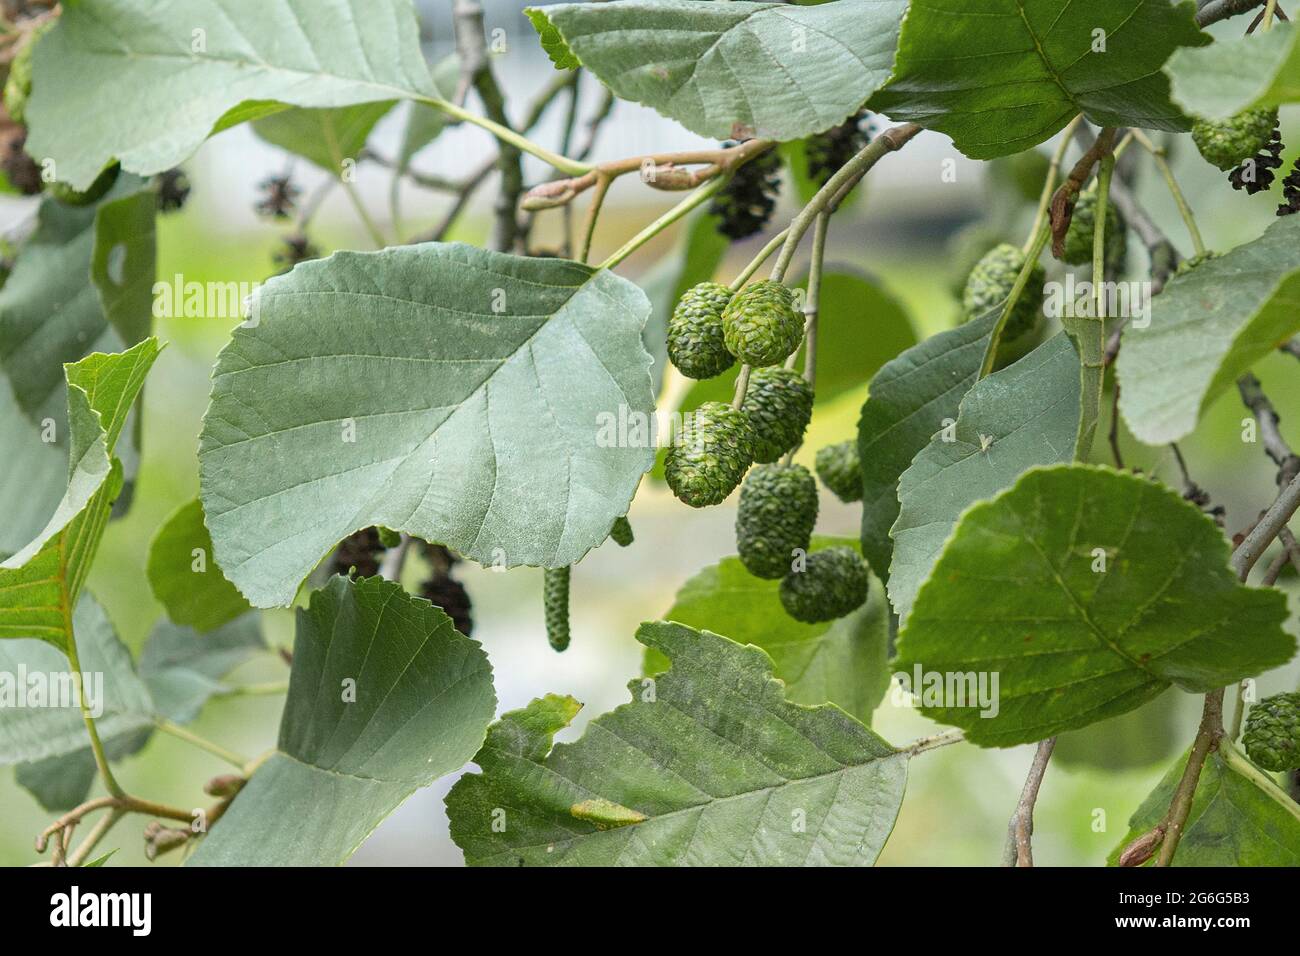 Ontani neri, ontano nero, europeo (ontano Alnus glutinosa), il ramo con frutti immaturi, Germania Foto Stock